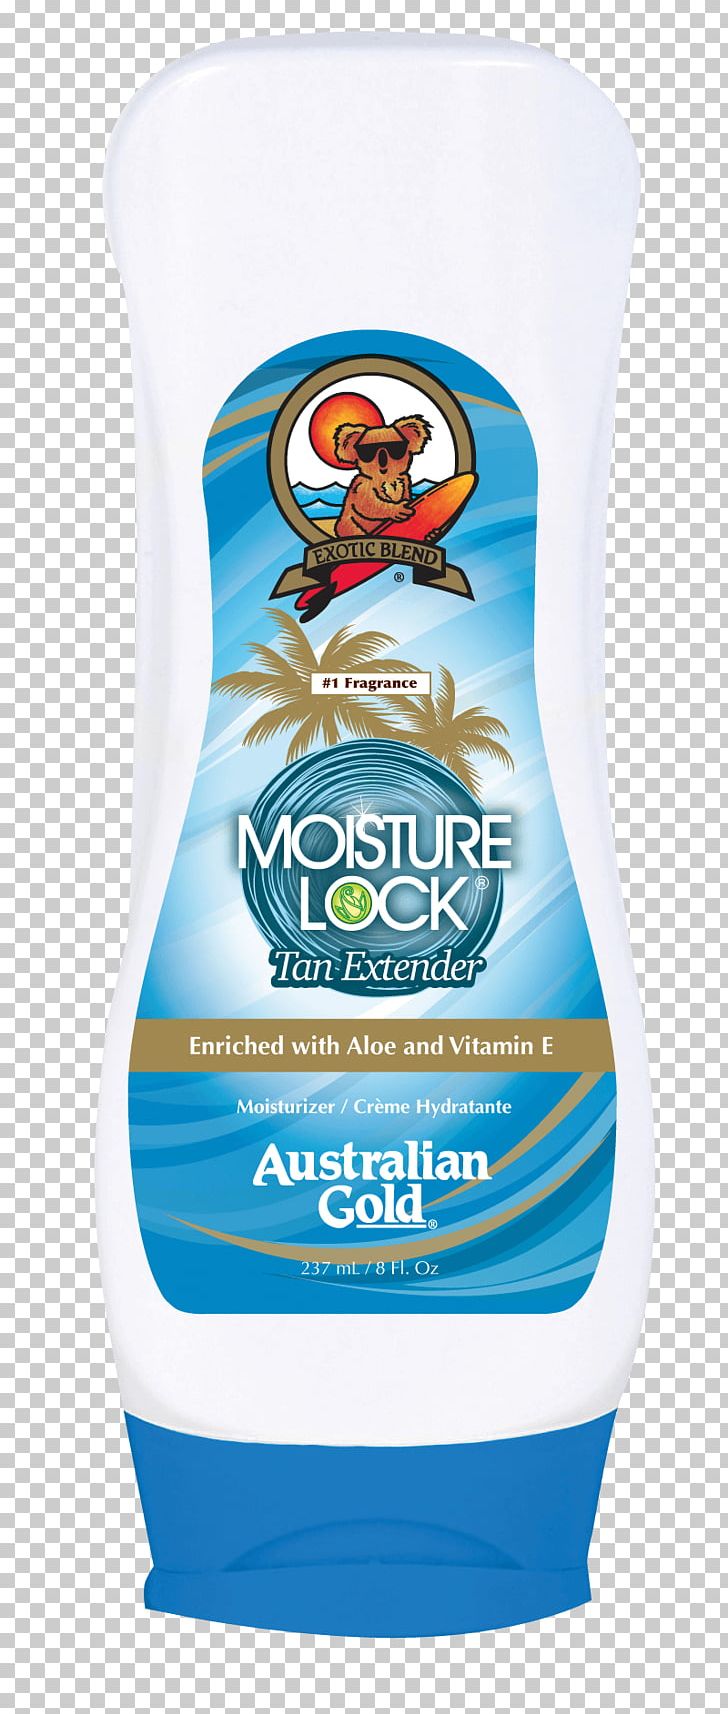 Indoor Tanning Lotion Sunscreen Sun Tanning Australian Gold Moisture Lock Tan Extender PNG, Clipart, Aftersun, Aloe Vera, Cosmetics, Gel, Indoor Tanning Free PNG Download